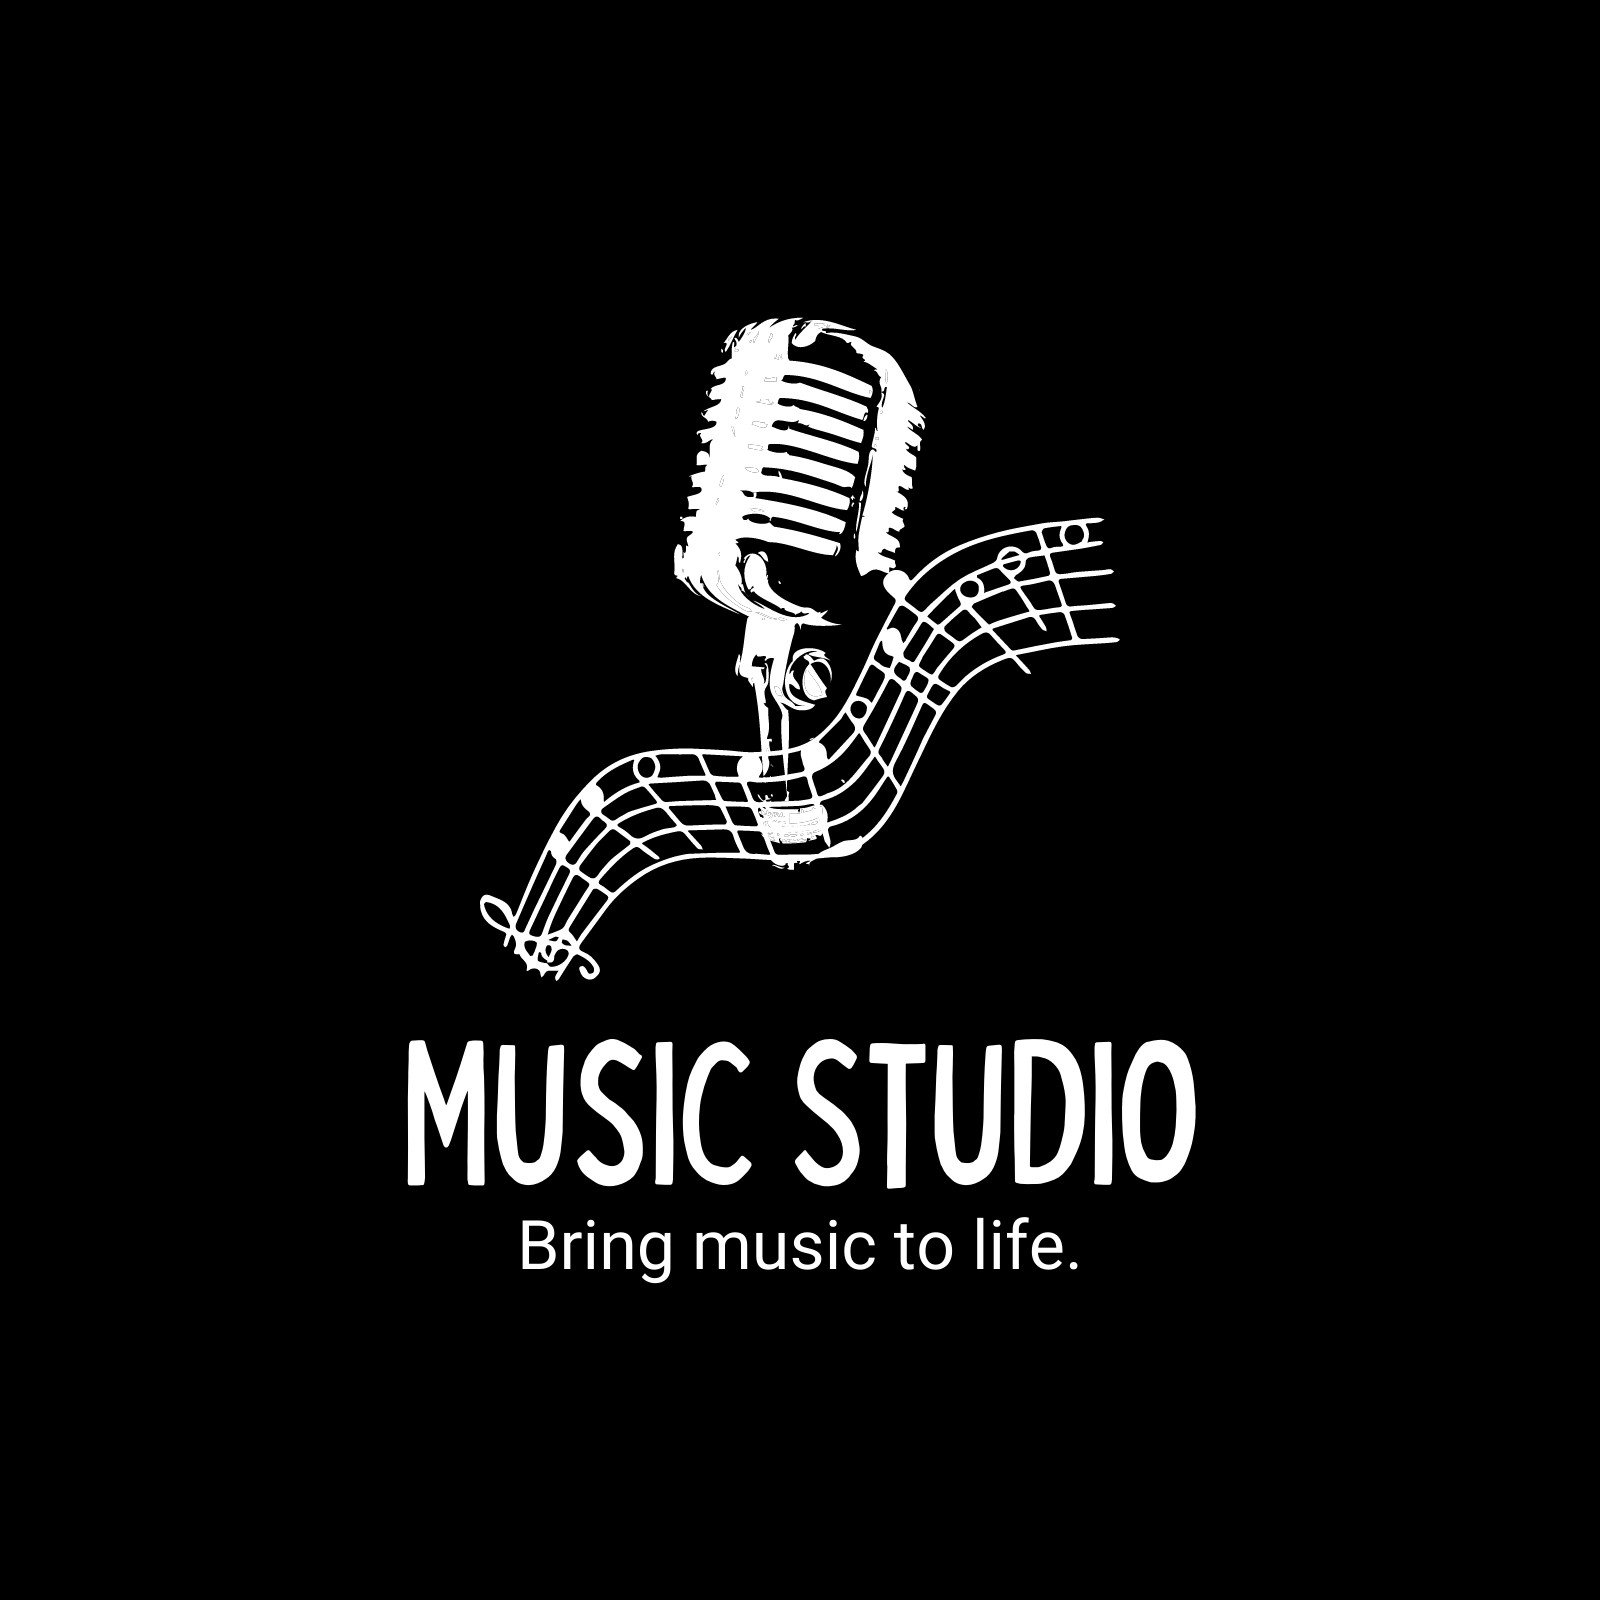 Music Logo Original Design Music Studio Shop Badge Vector Illustration On A  White Background Stock Illustration - Download Image Now - iStock